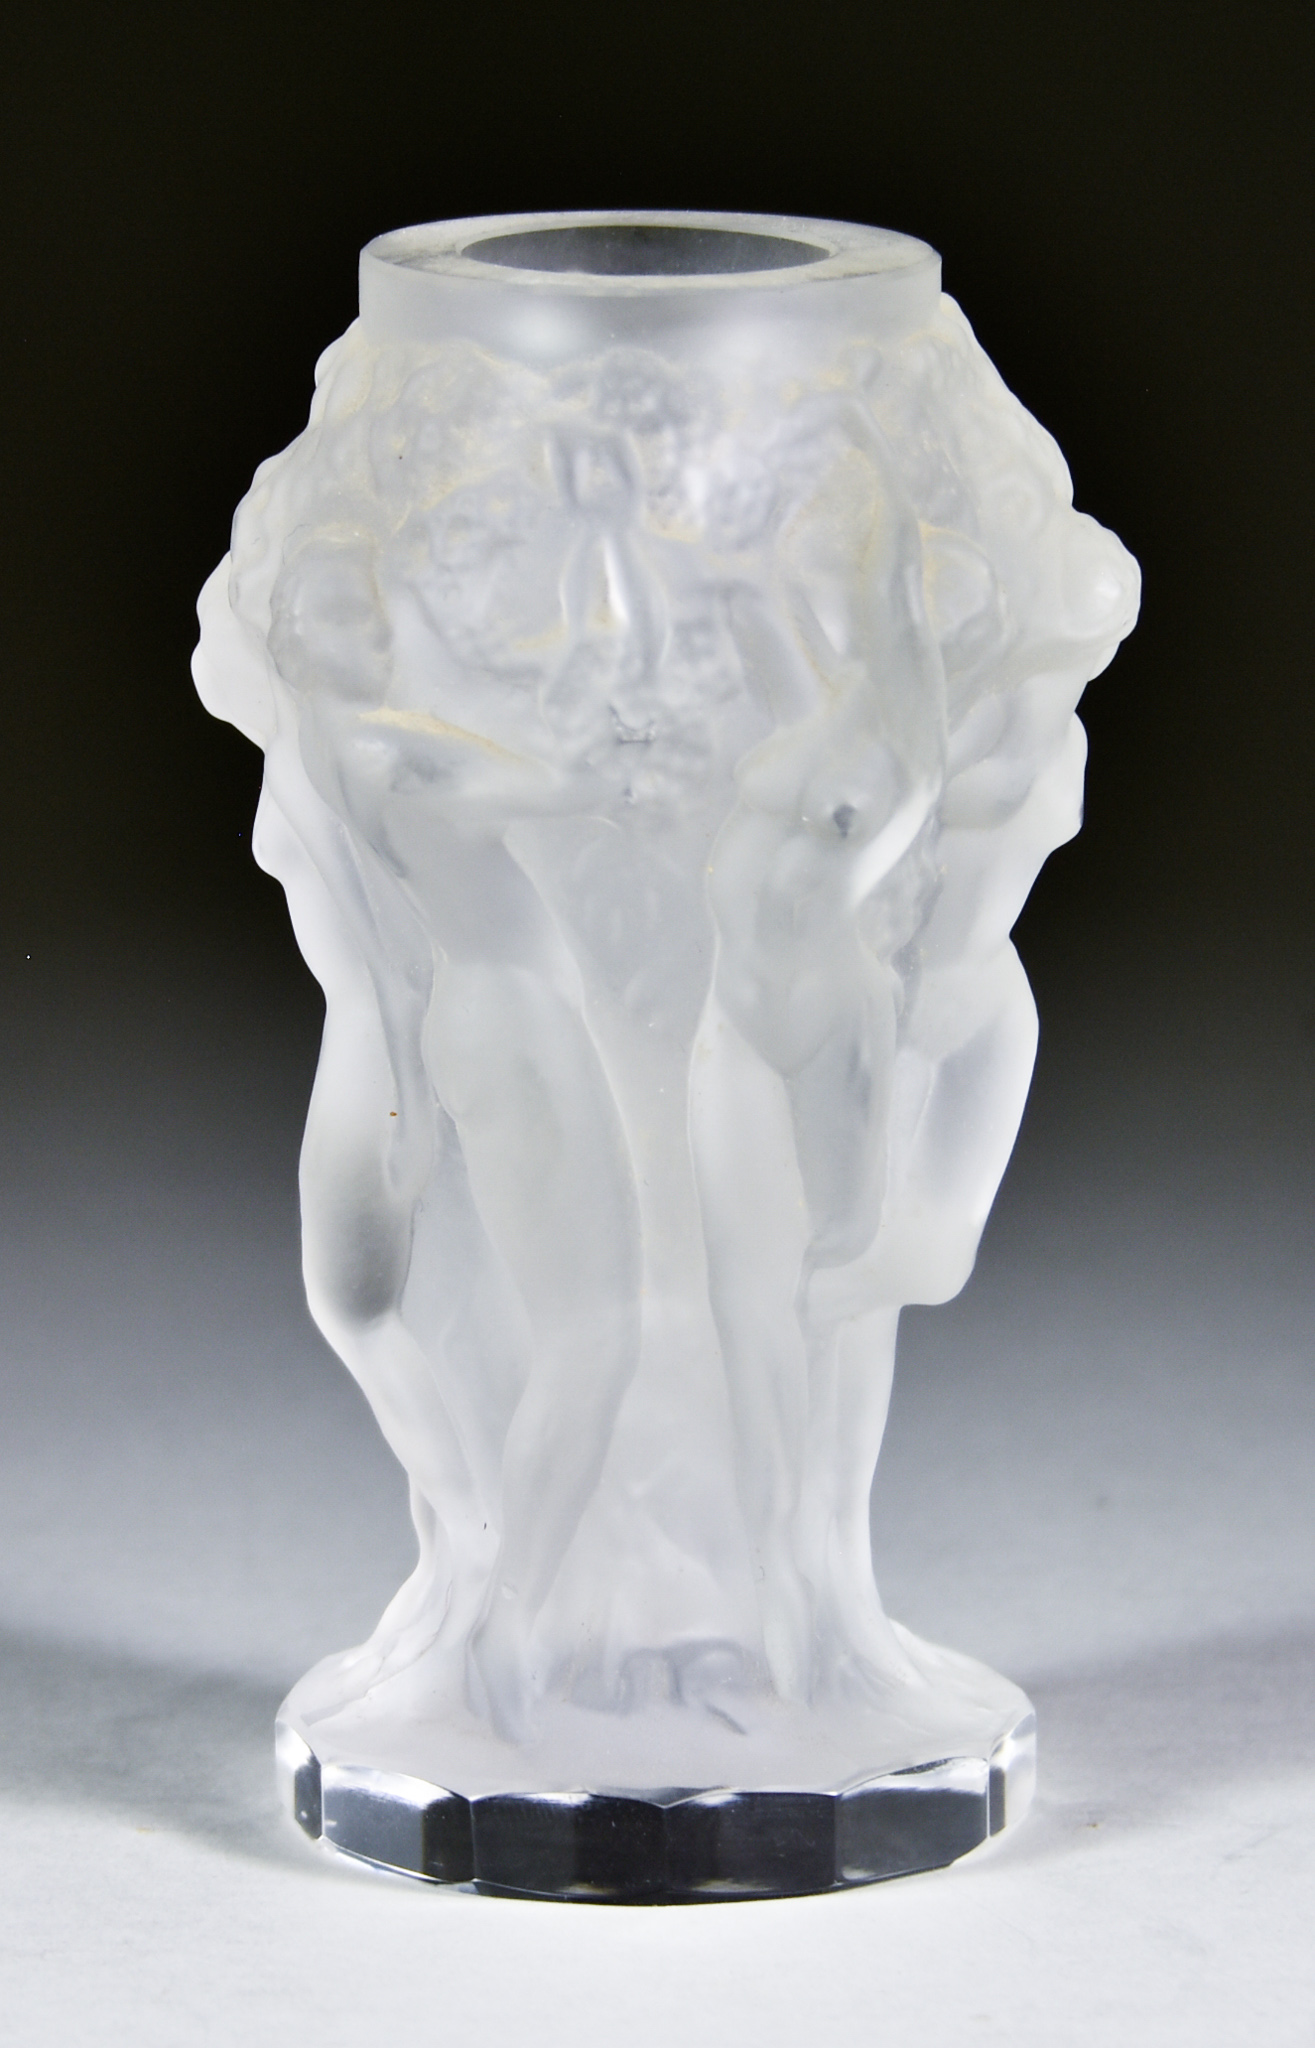 A Hoffman & Schlevogt "Ingrid" Frosted Glass Vase, 1930s/50s, of dancing nude figures, unsigned,